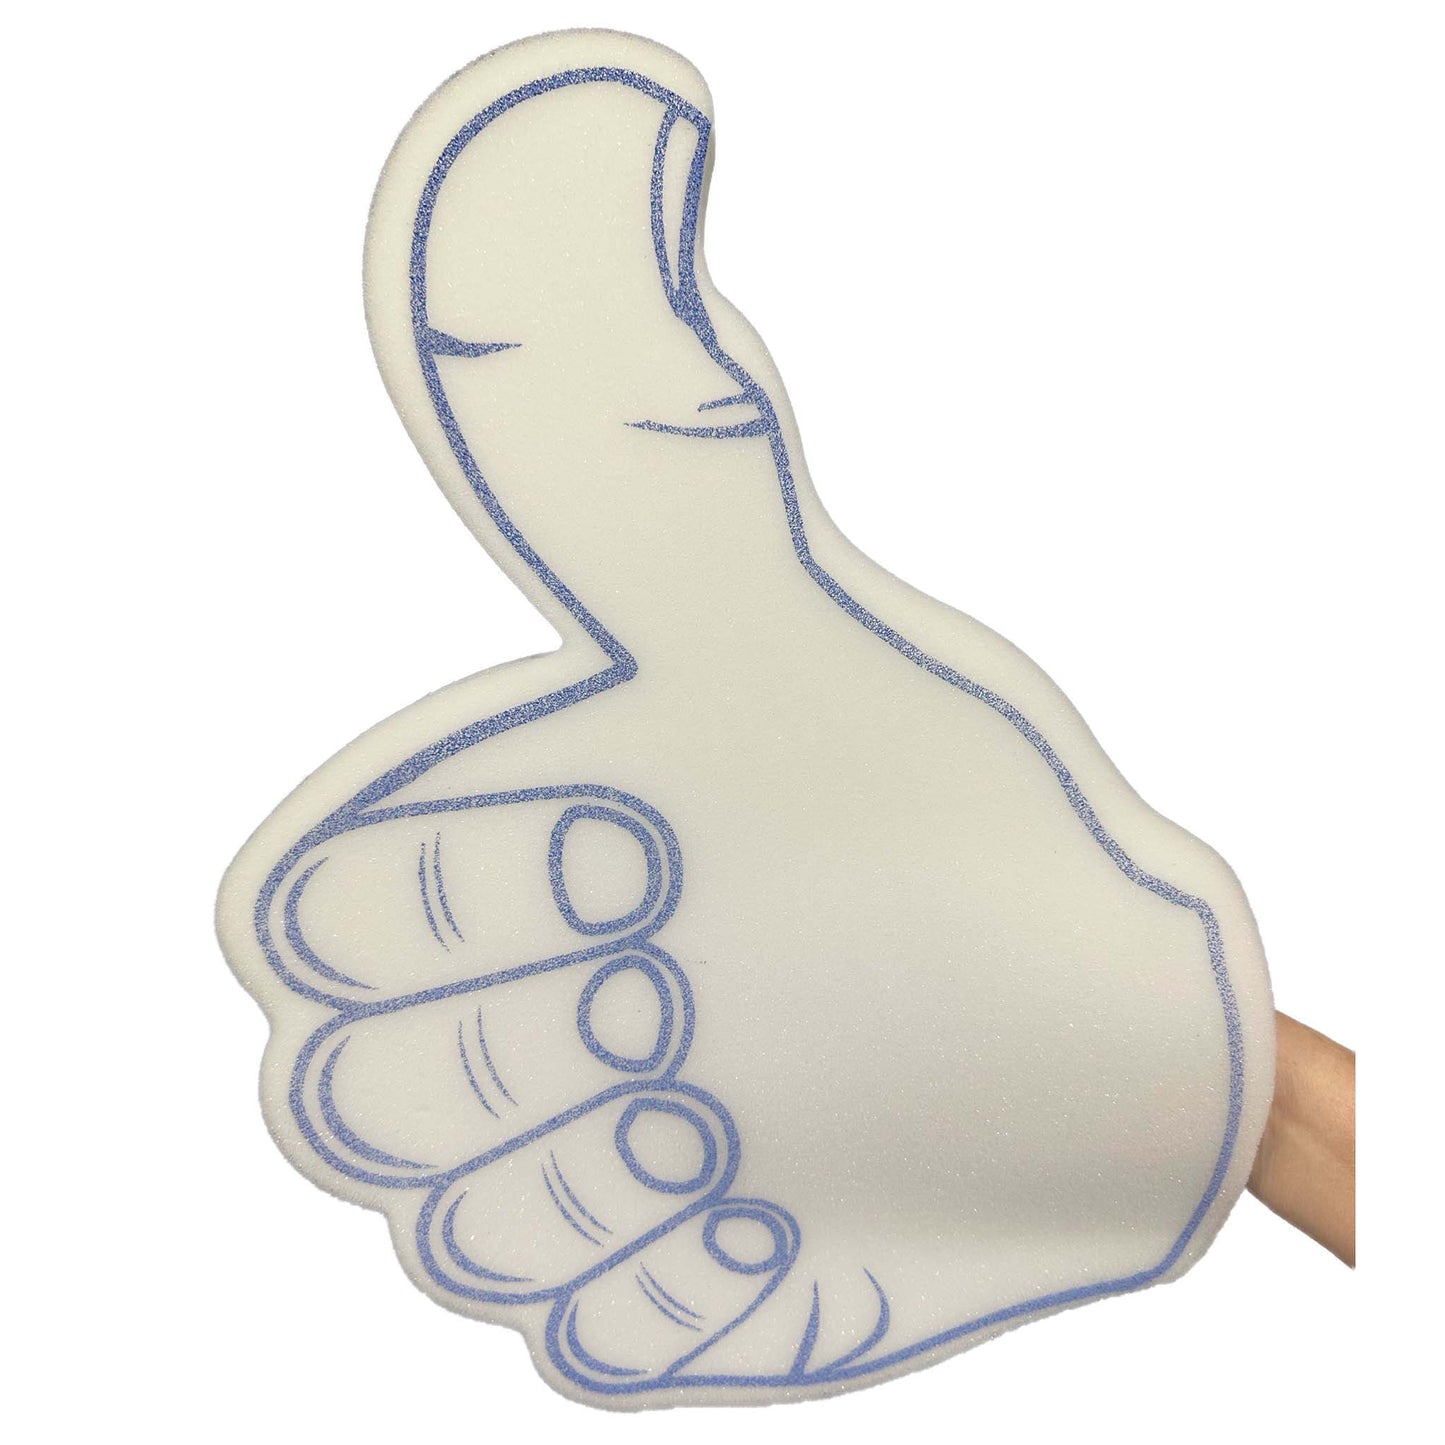 Thumbs up Foam Hand